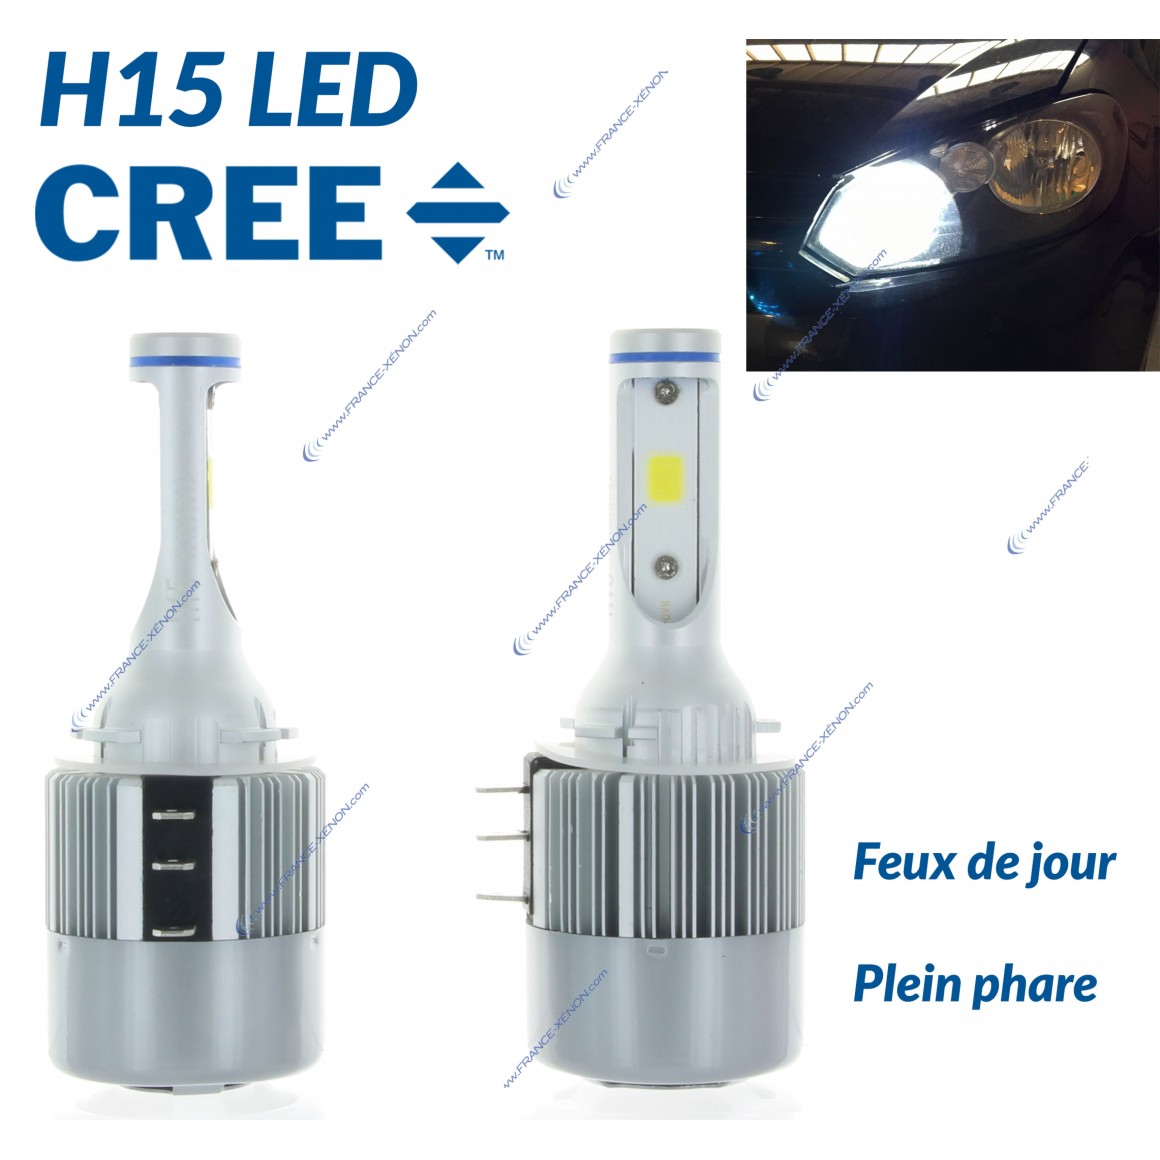 2 x 36w LED bulbs h15 - 3800lm - upscale - France-Xenon